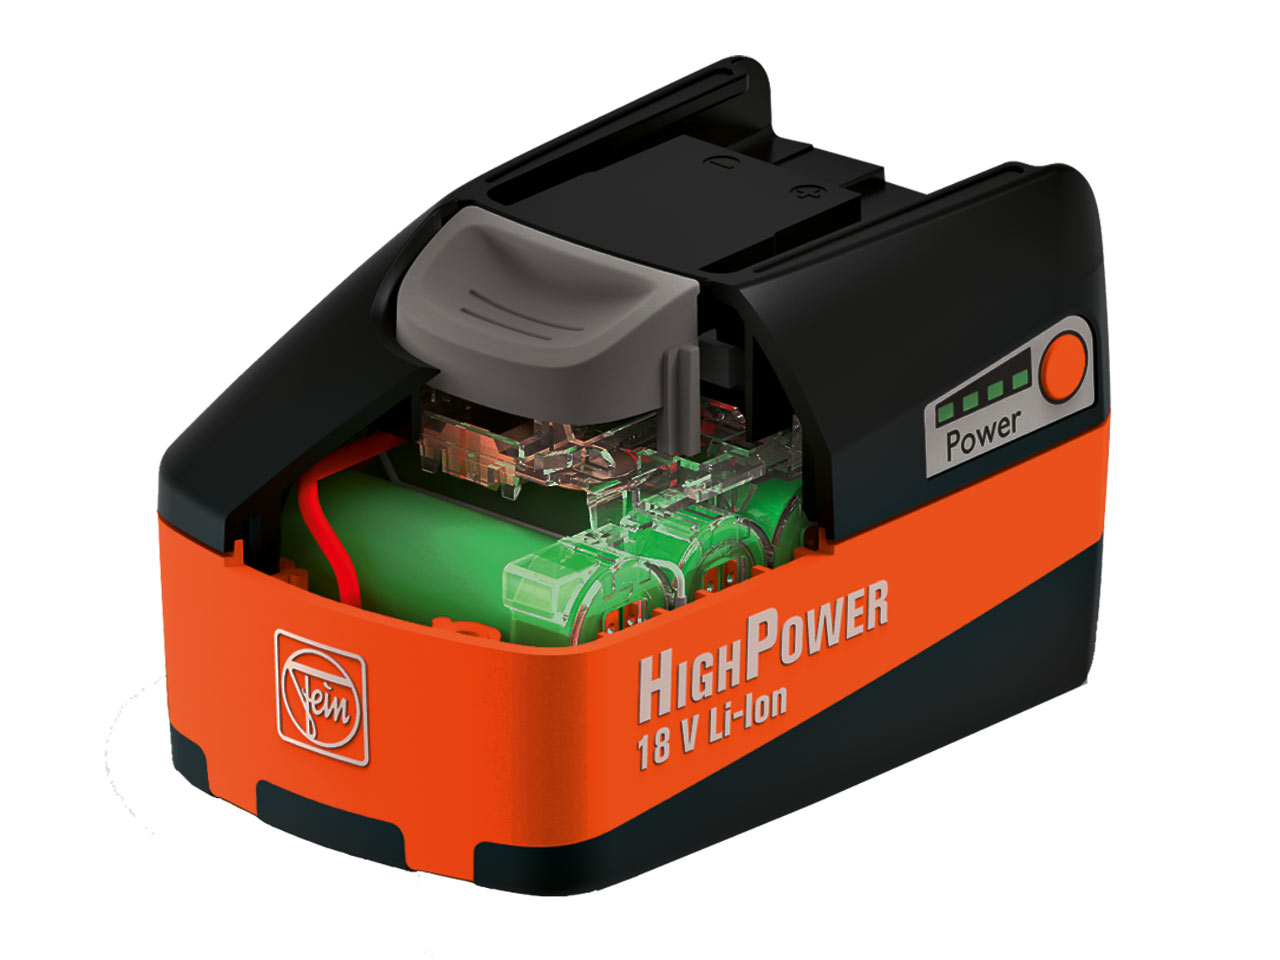 Fein 92604179020 18v 5.2 Ah HighPower Li-ion Battery